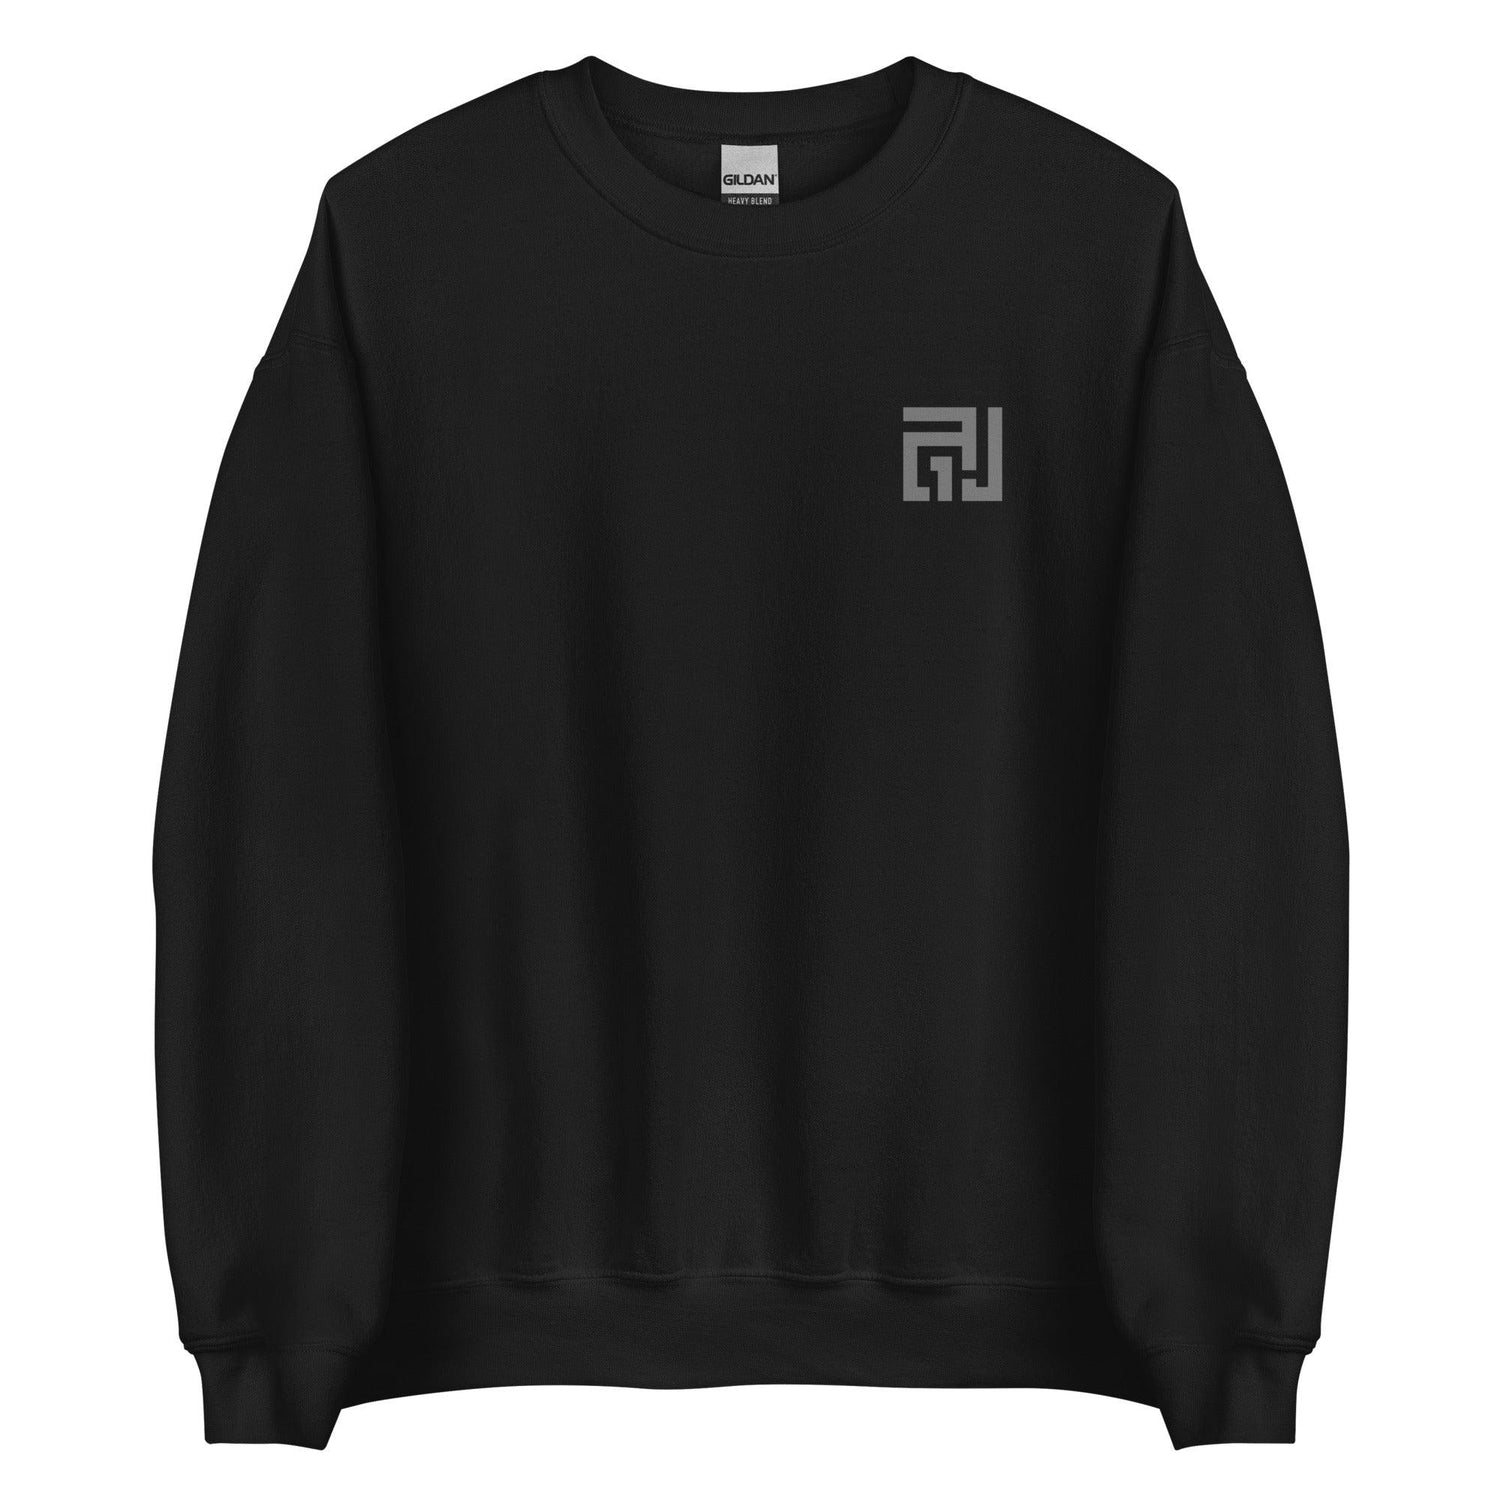 Andrew Jones "Essential" Sweatshirt - Fan Arch